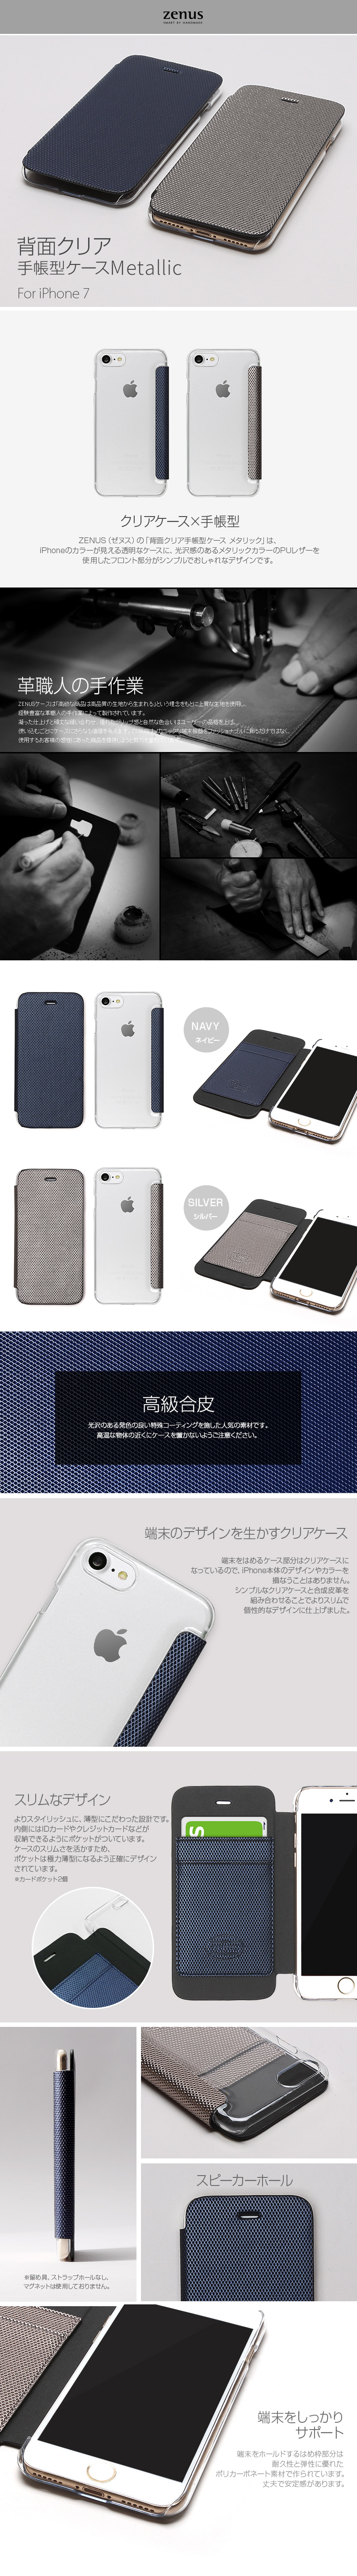 Zenus Metallic Iphone Se 第2世代 Iphone 8 Iphone 7 ケース レザー 背面クリア シンプル 手帳型 ケース